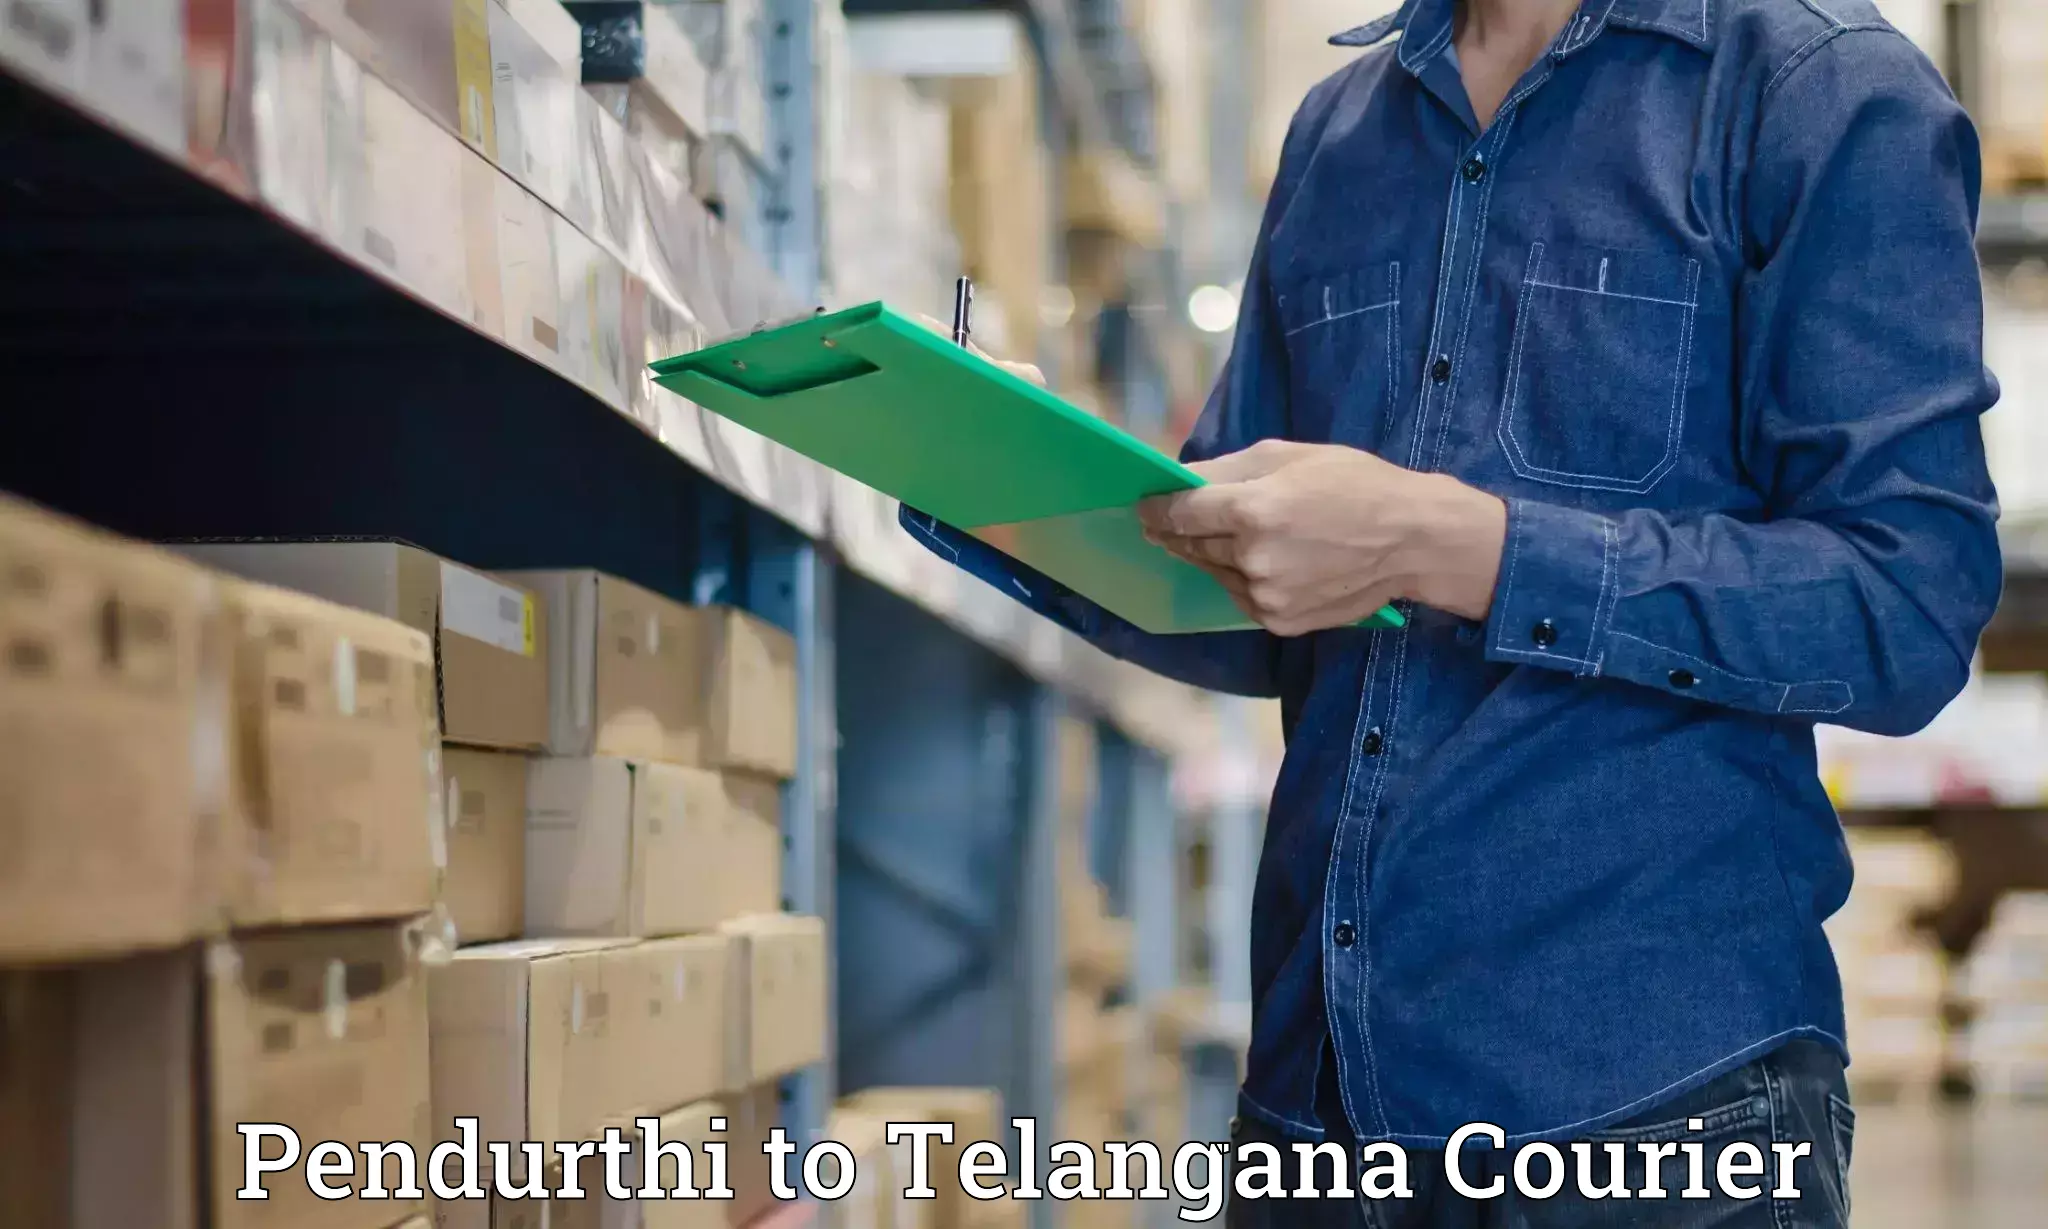 Courier service partnerships Pendurthi to Tadvai